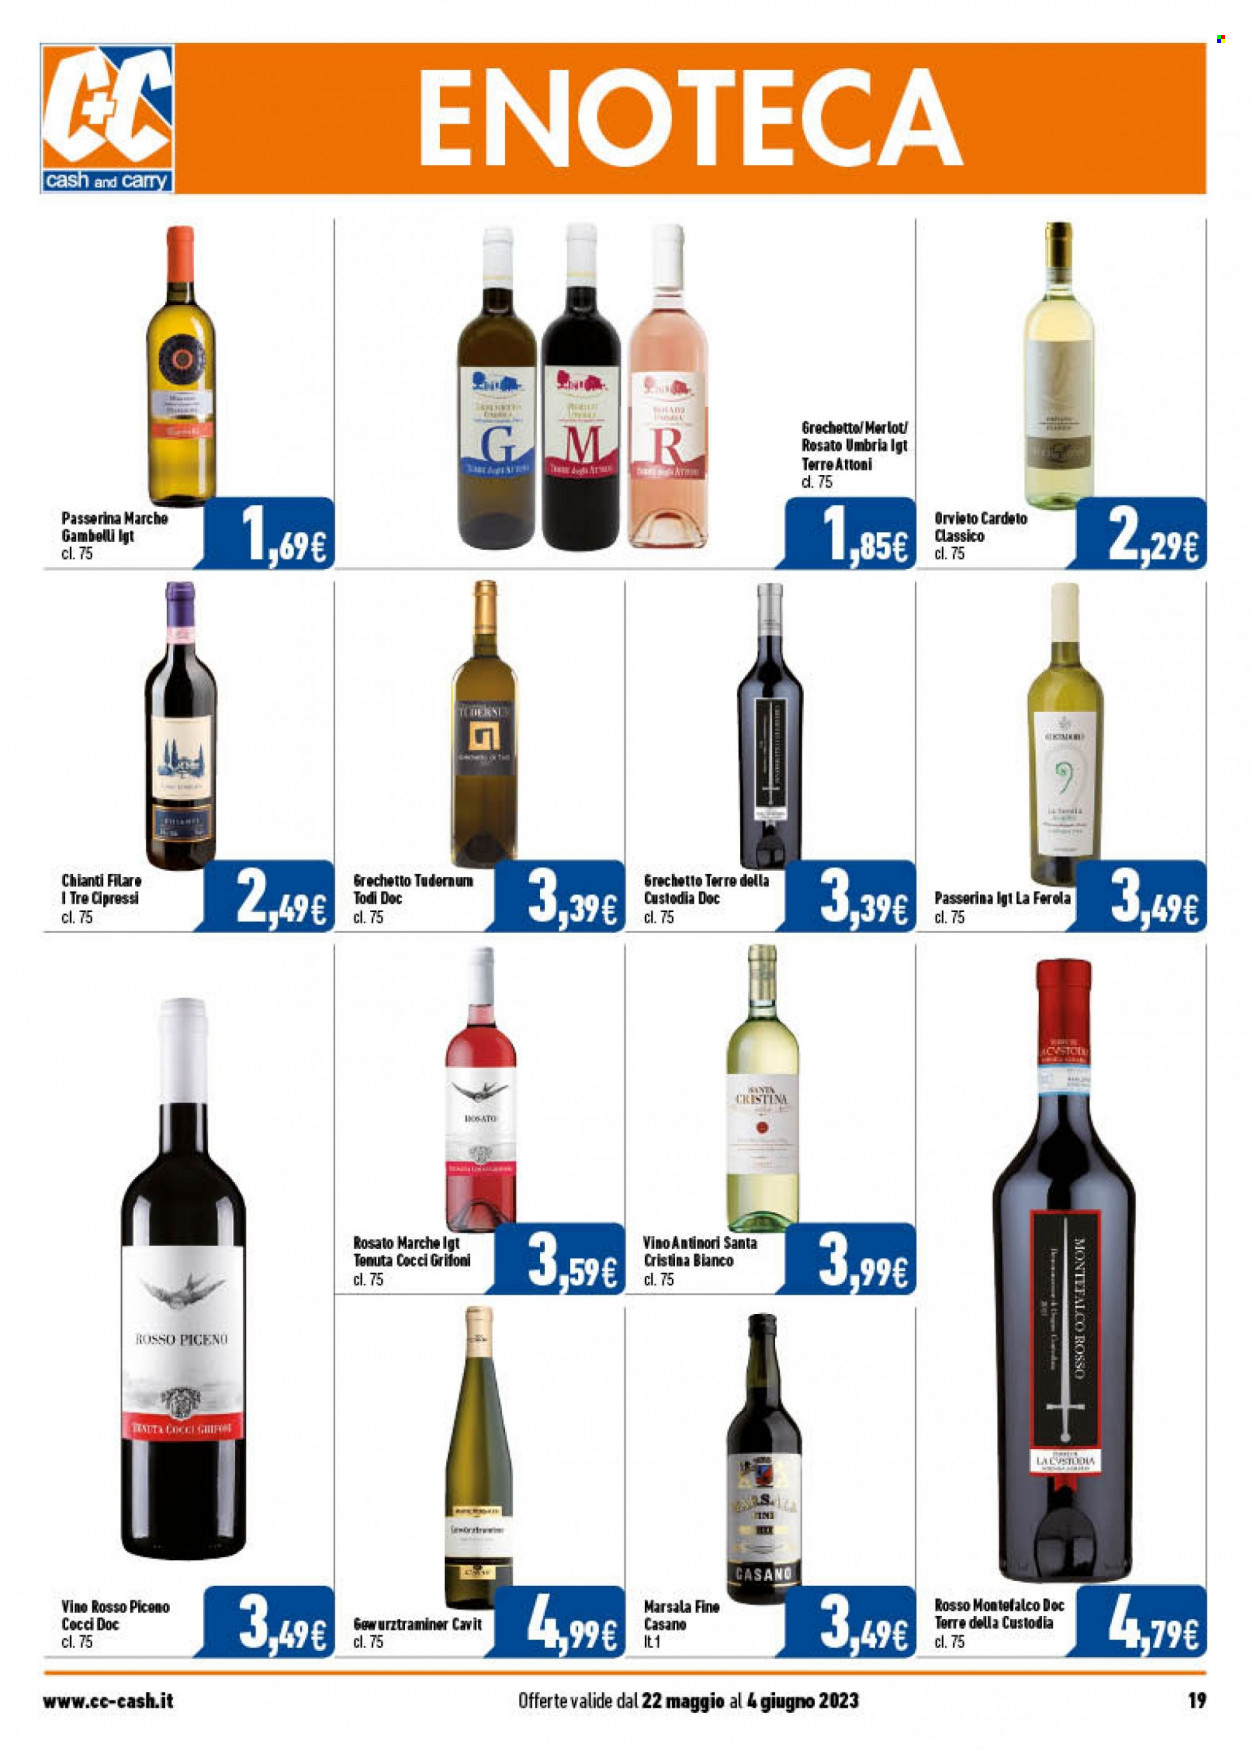 thumbnail - Volantino C+C Cash & Carry - 22/5/2023 - 4/6/2023 - Prodotti in offerta - Merlot, vino rosso, Chianti, vino, Marsala. Pagina 19.